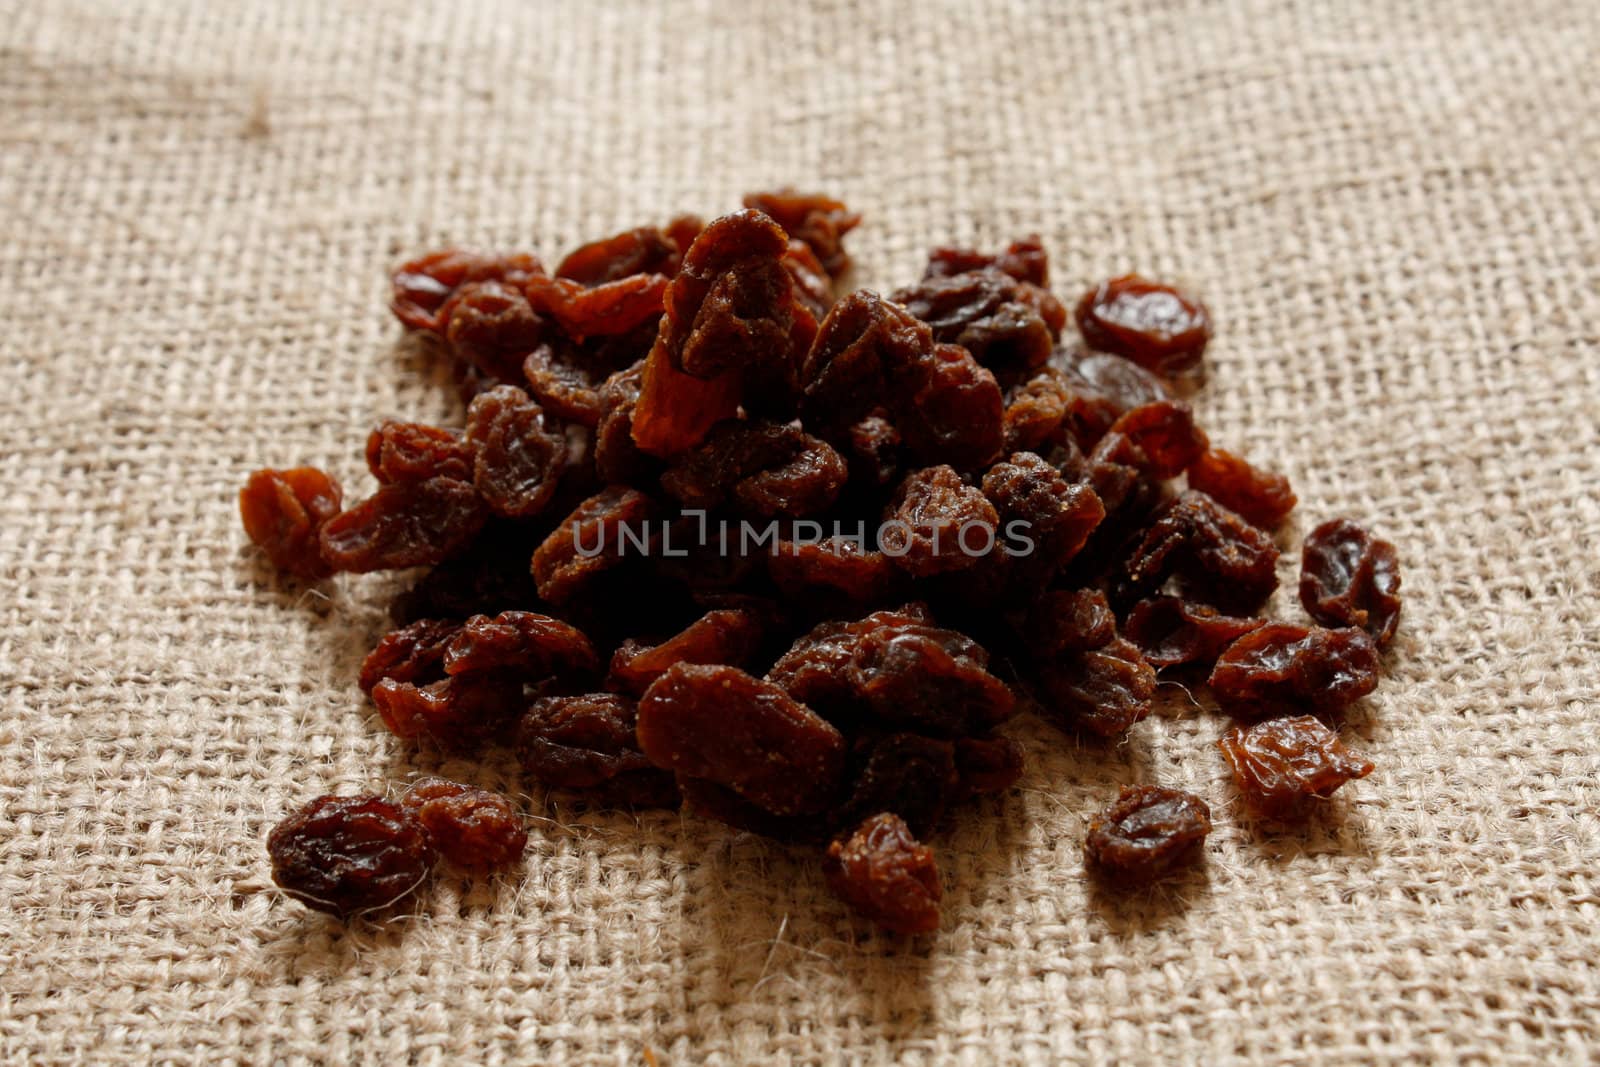 Raisins on a textured background